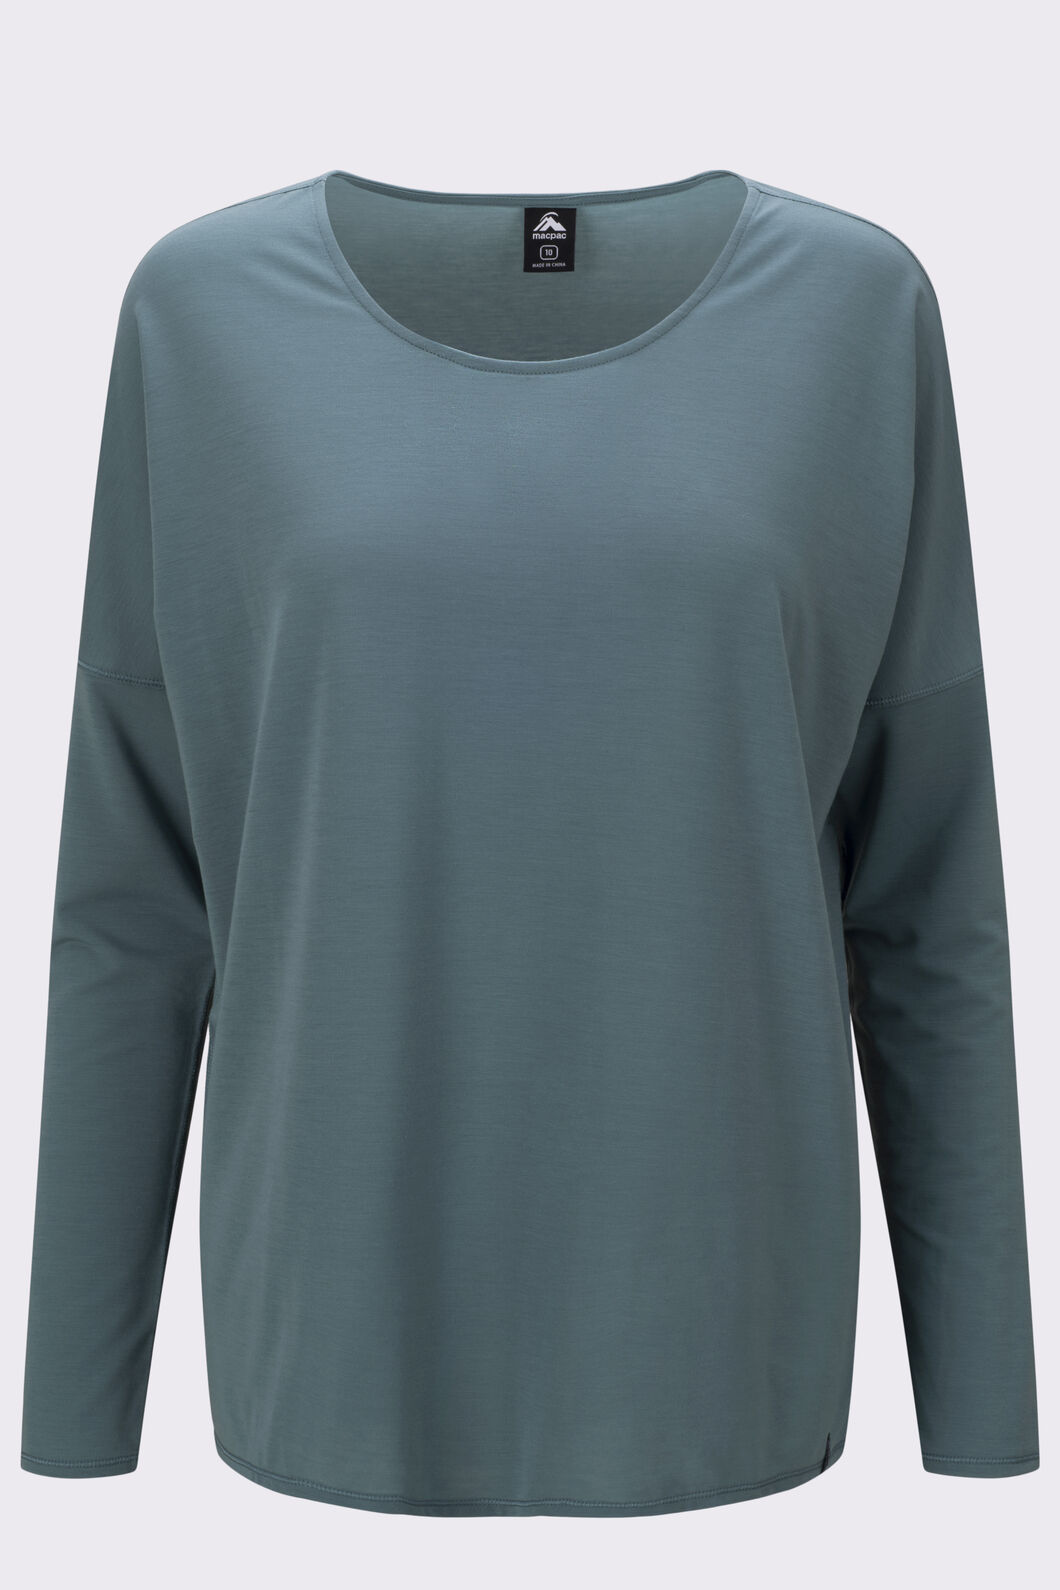 Macpac Women's Eva Long Sleeve T-Shirt, North Atlantic, hi-res